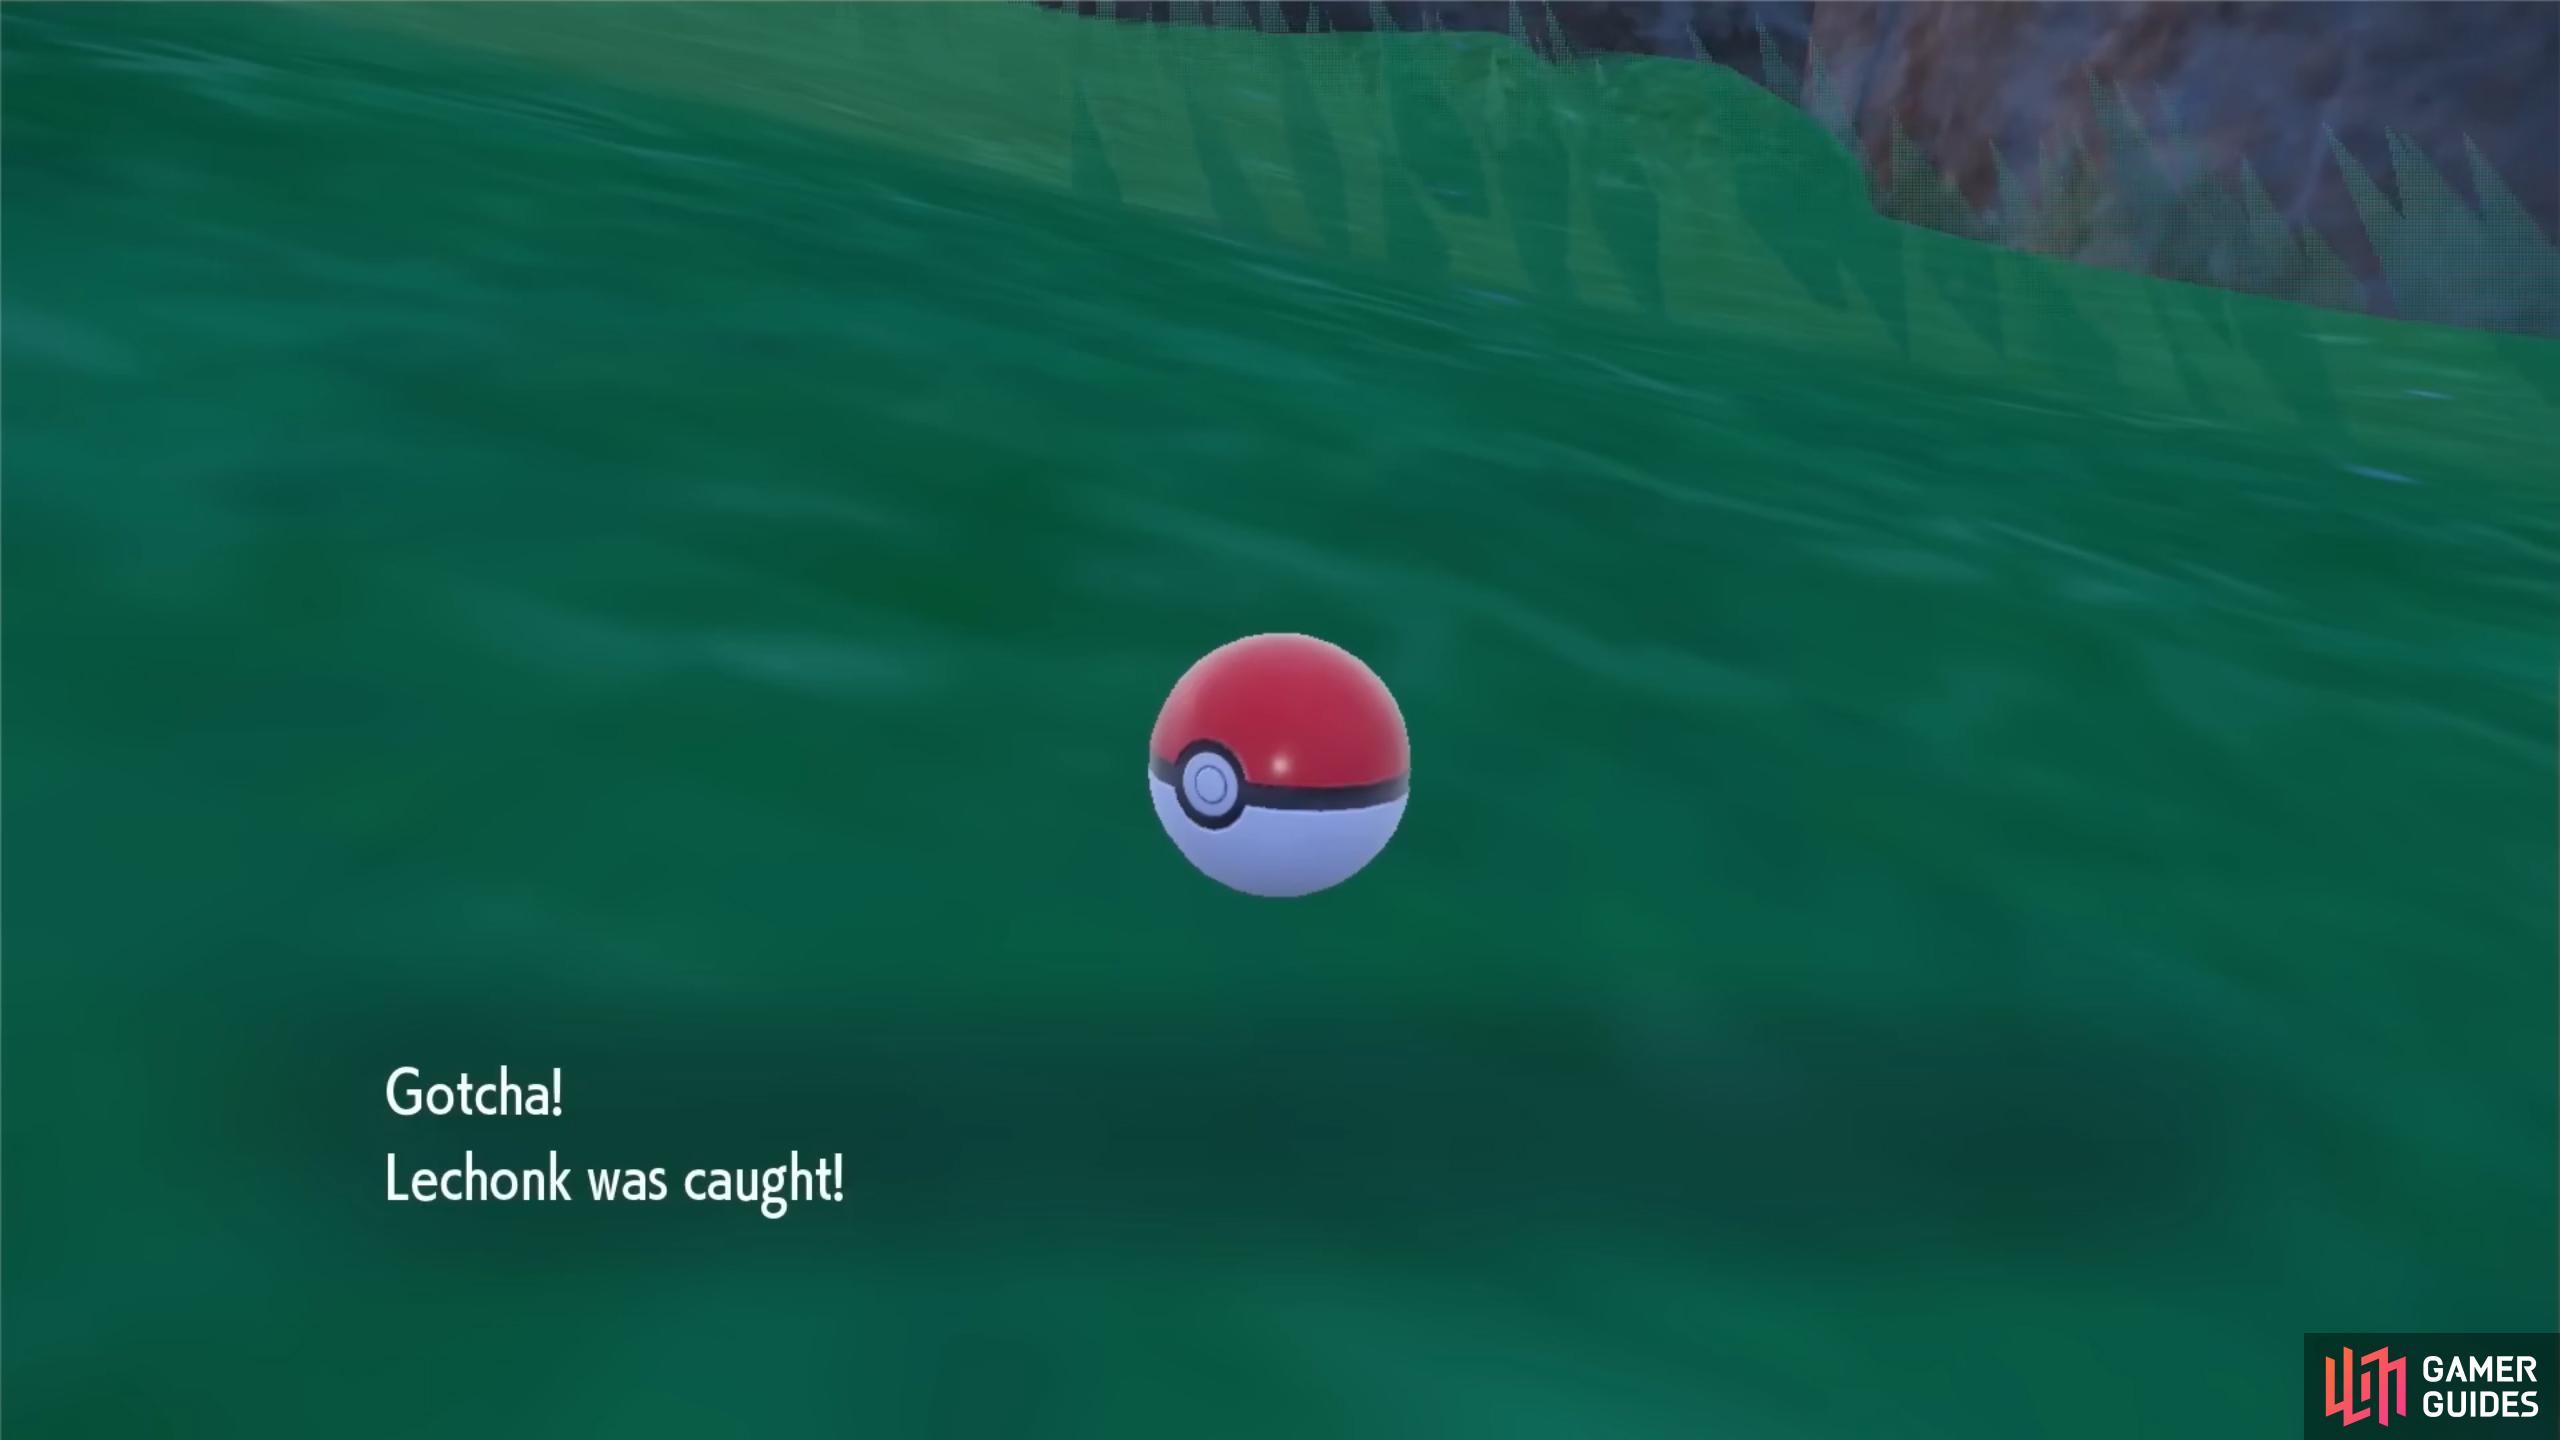 If successful, you'll catch the Pokémon! (Credit: Serebii)